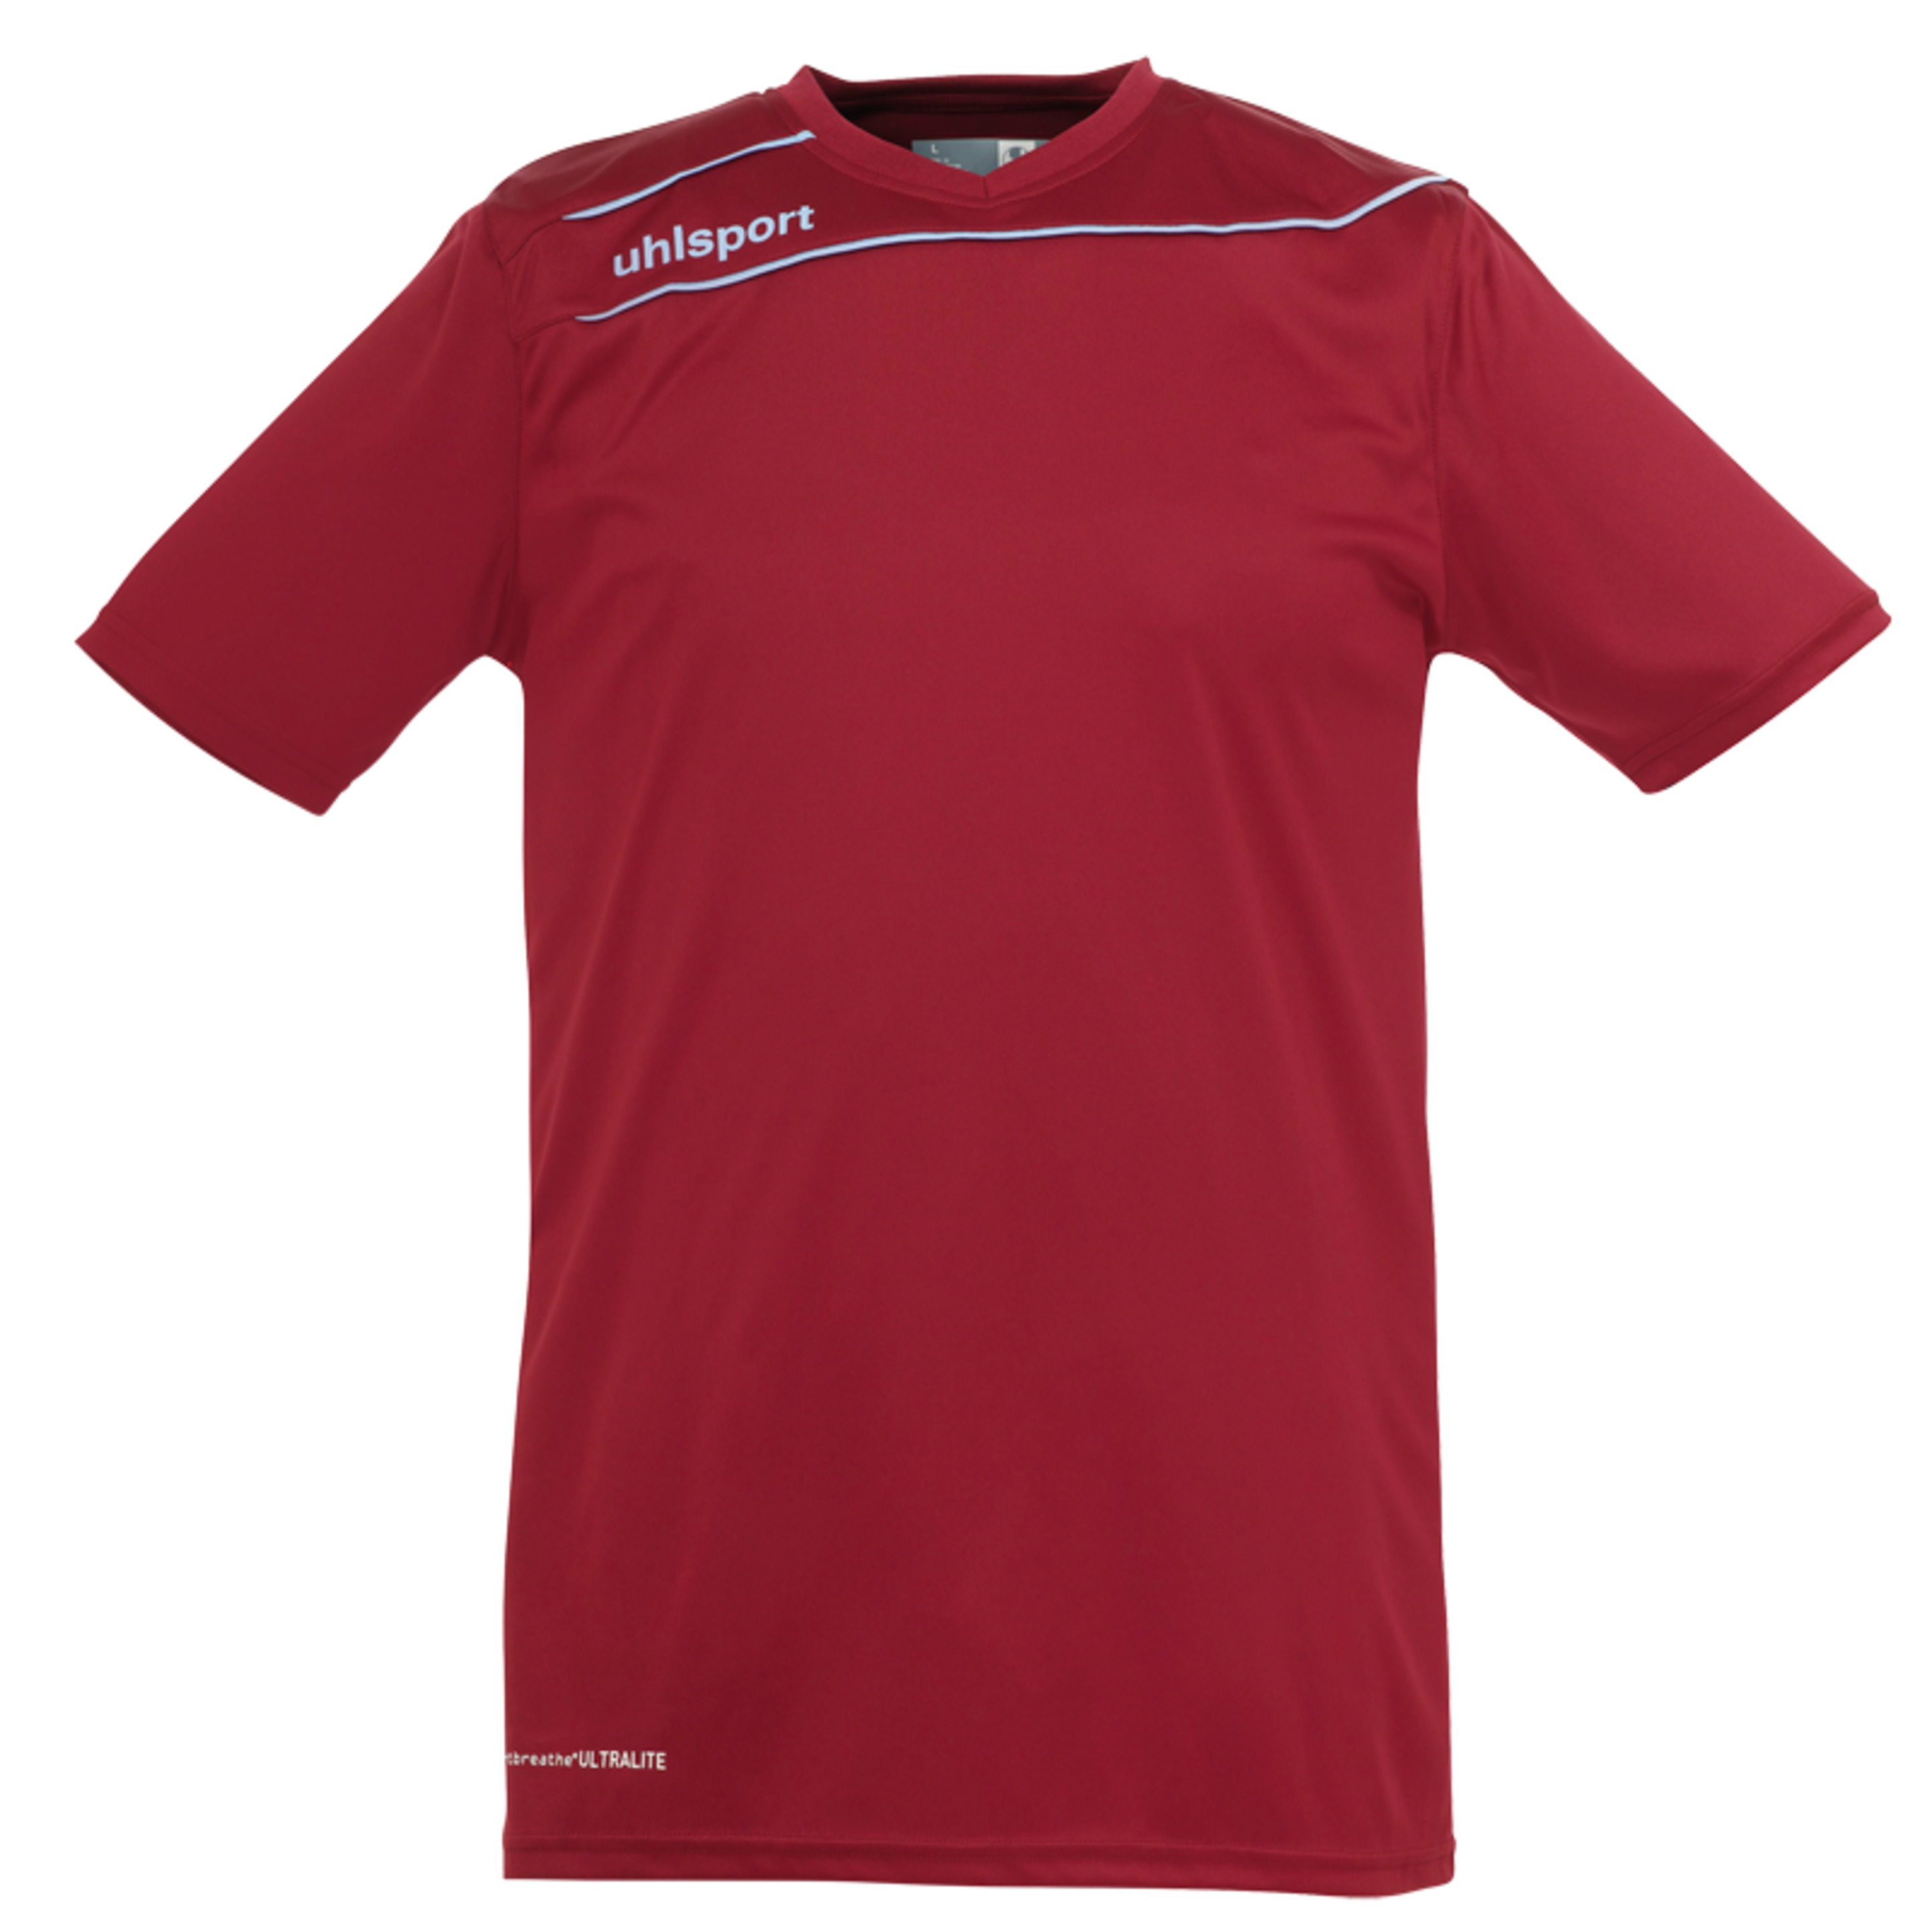 Stream 3.0 Camiseta Mc Burdeos/celeste Uhlsport - azul/rojo  MKP